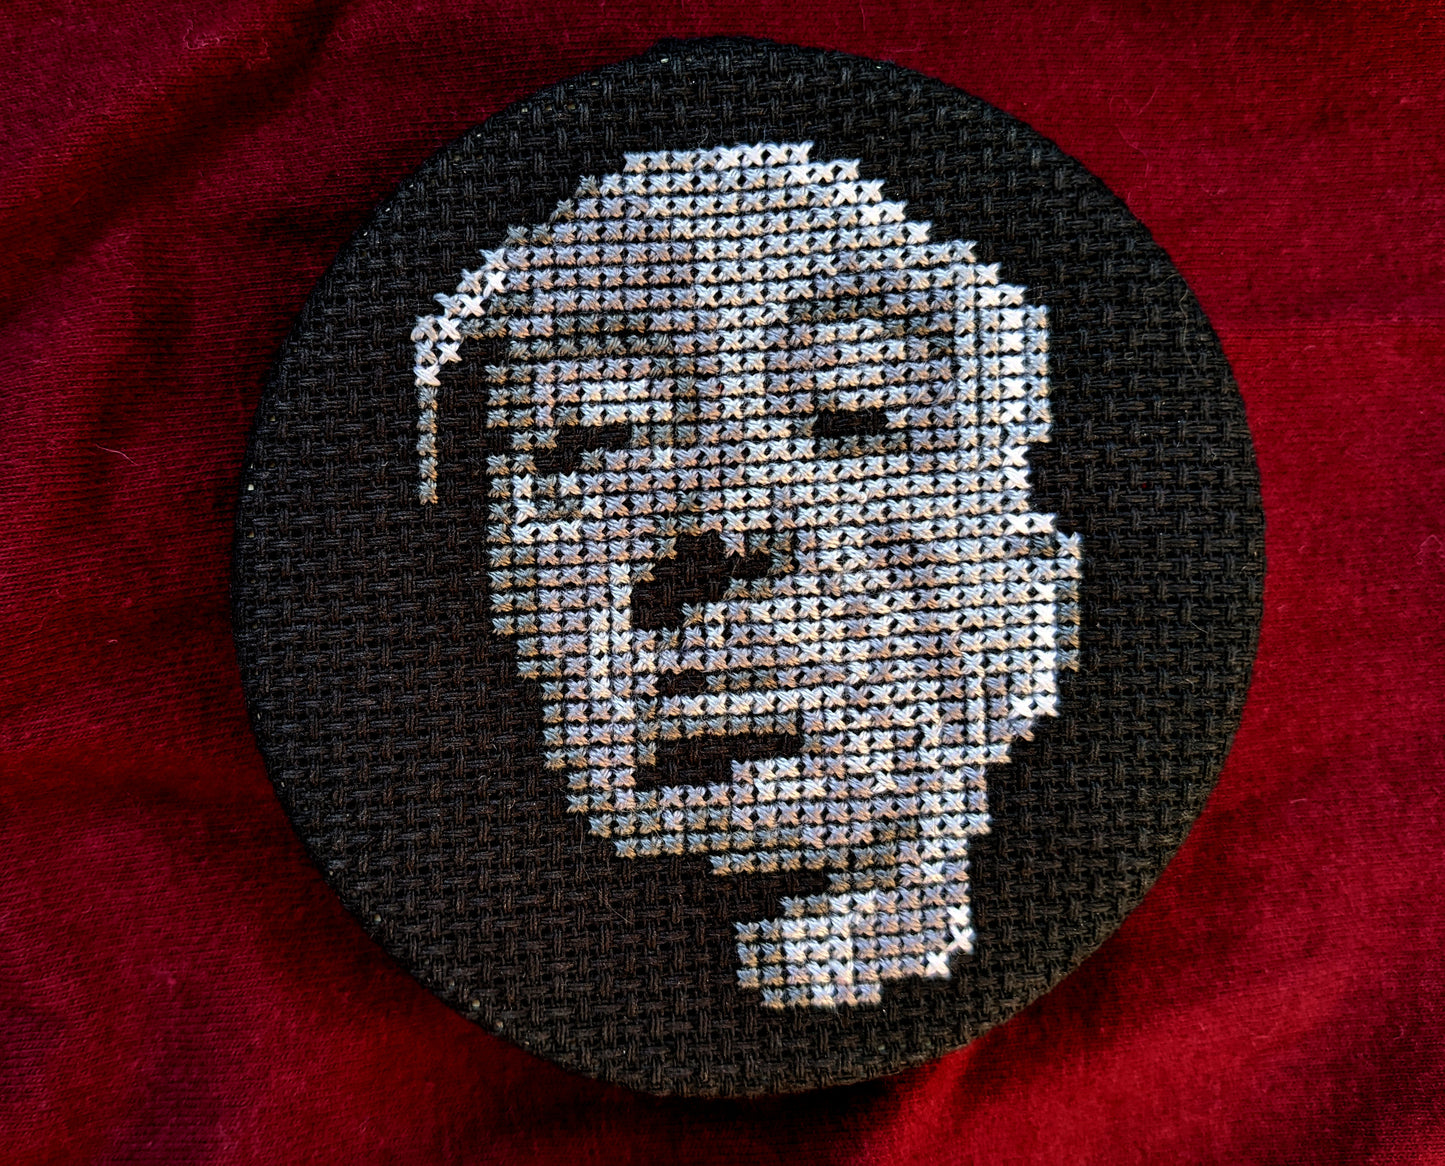 Alfred Hitchcock minimalist portrait cross stitch pattern (great beginner project)